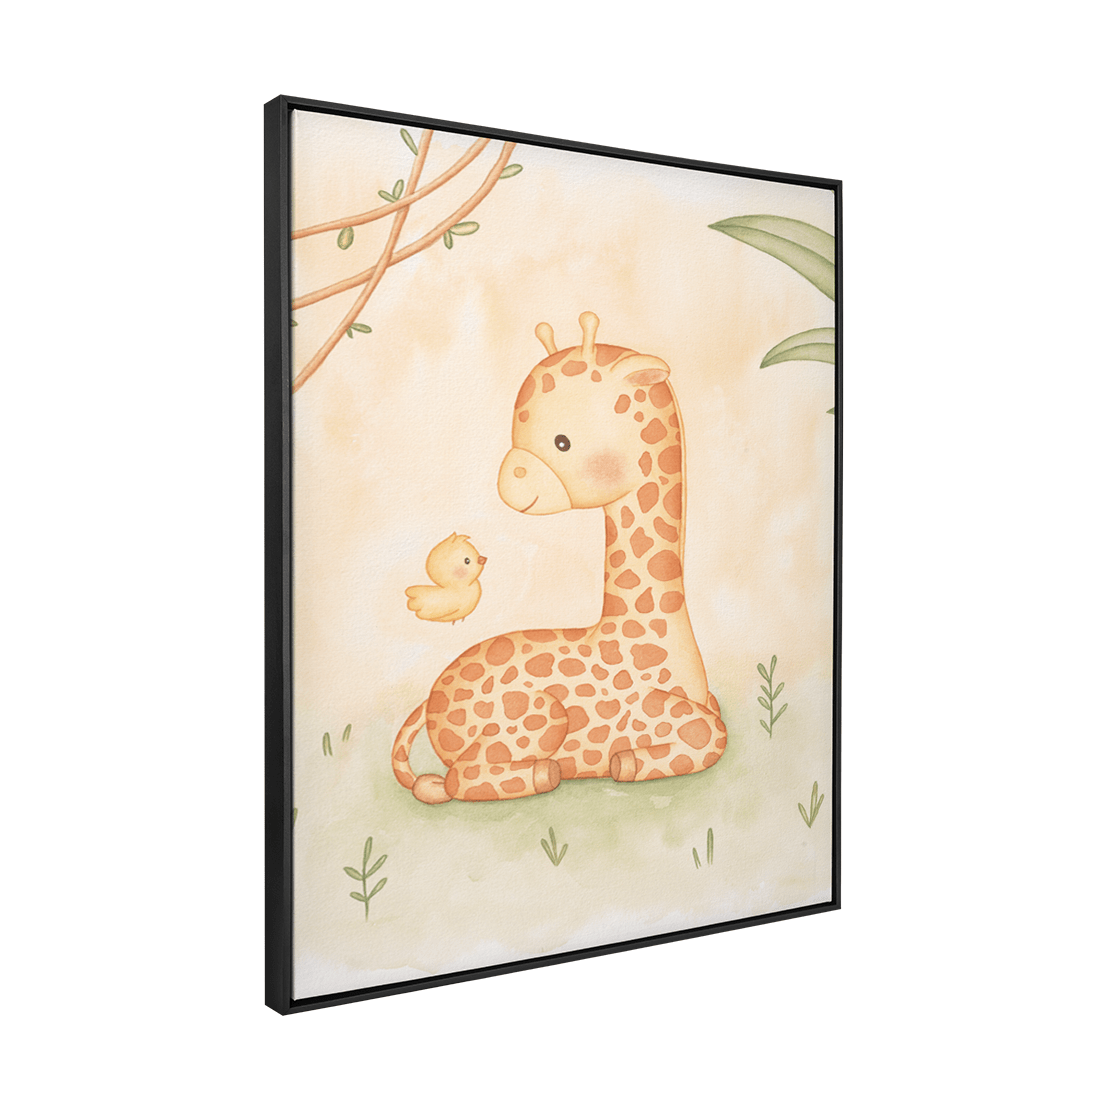 Quadro Decorativo Girafa | Daiane Barbosa